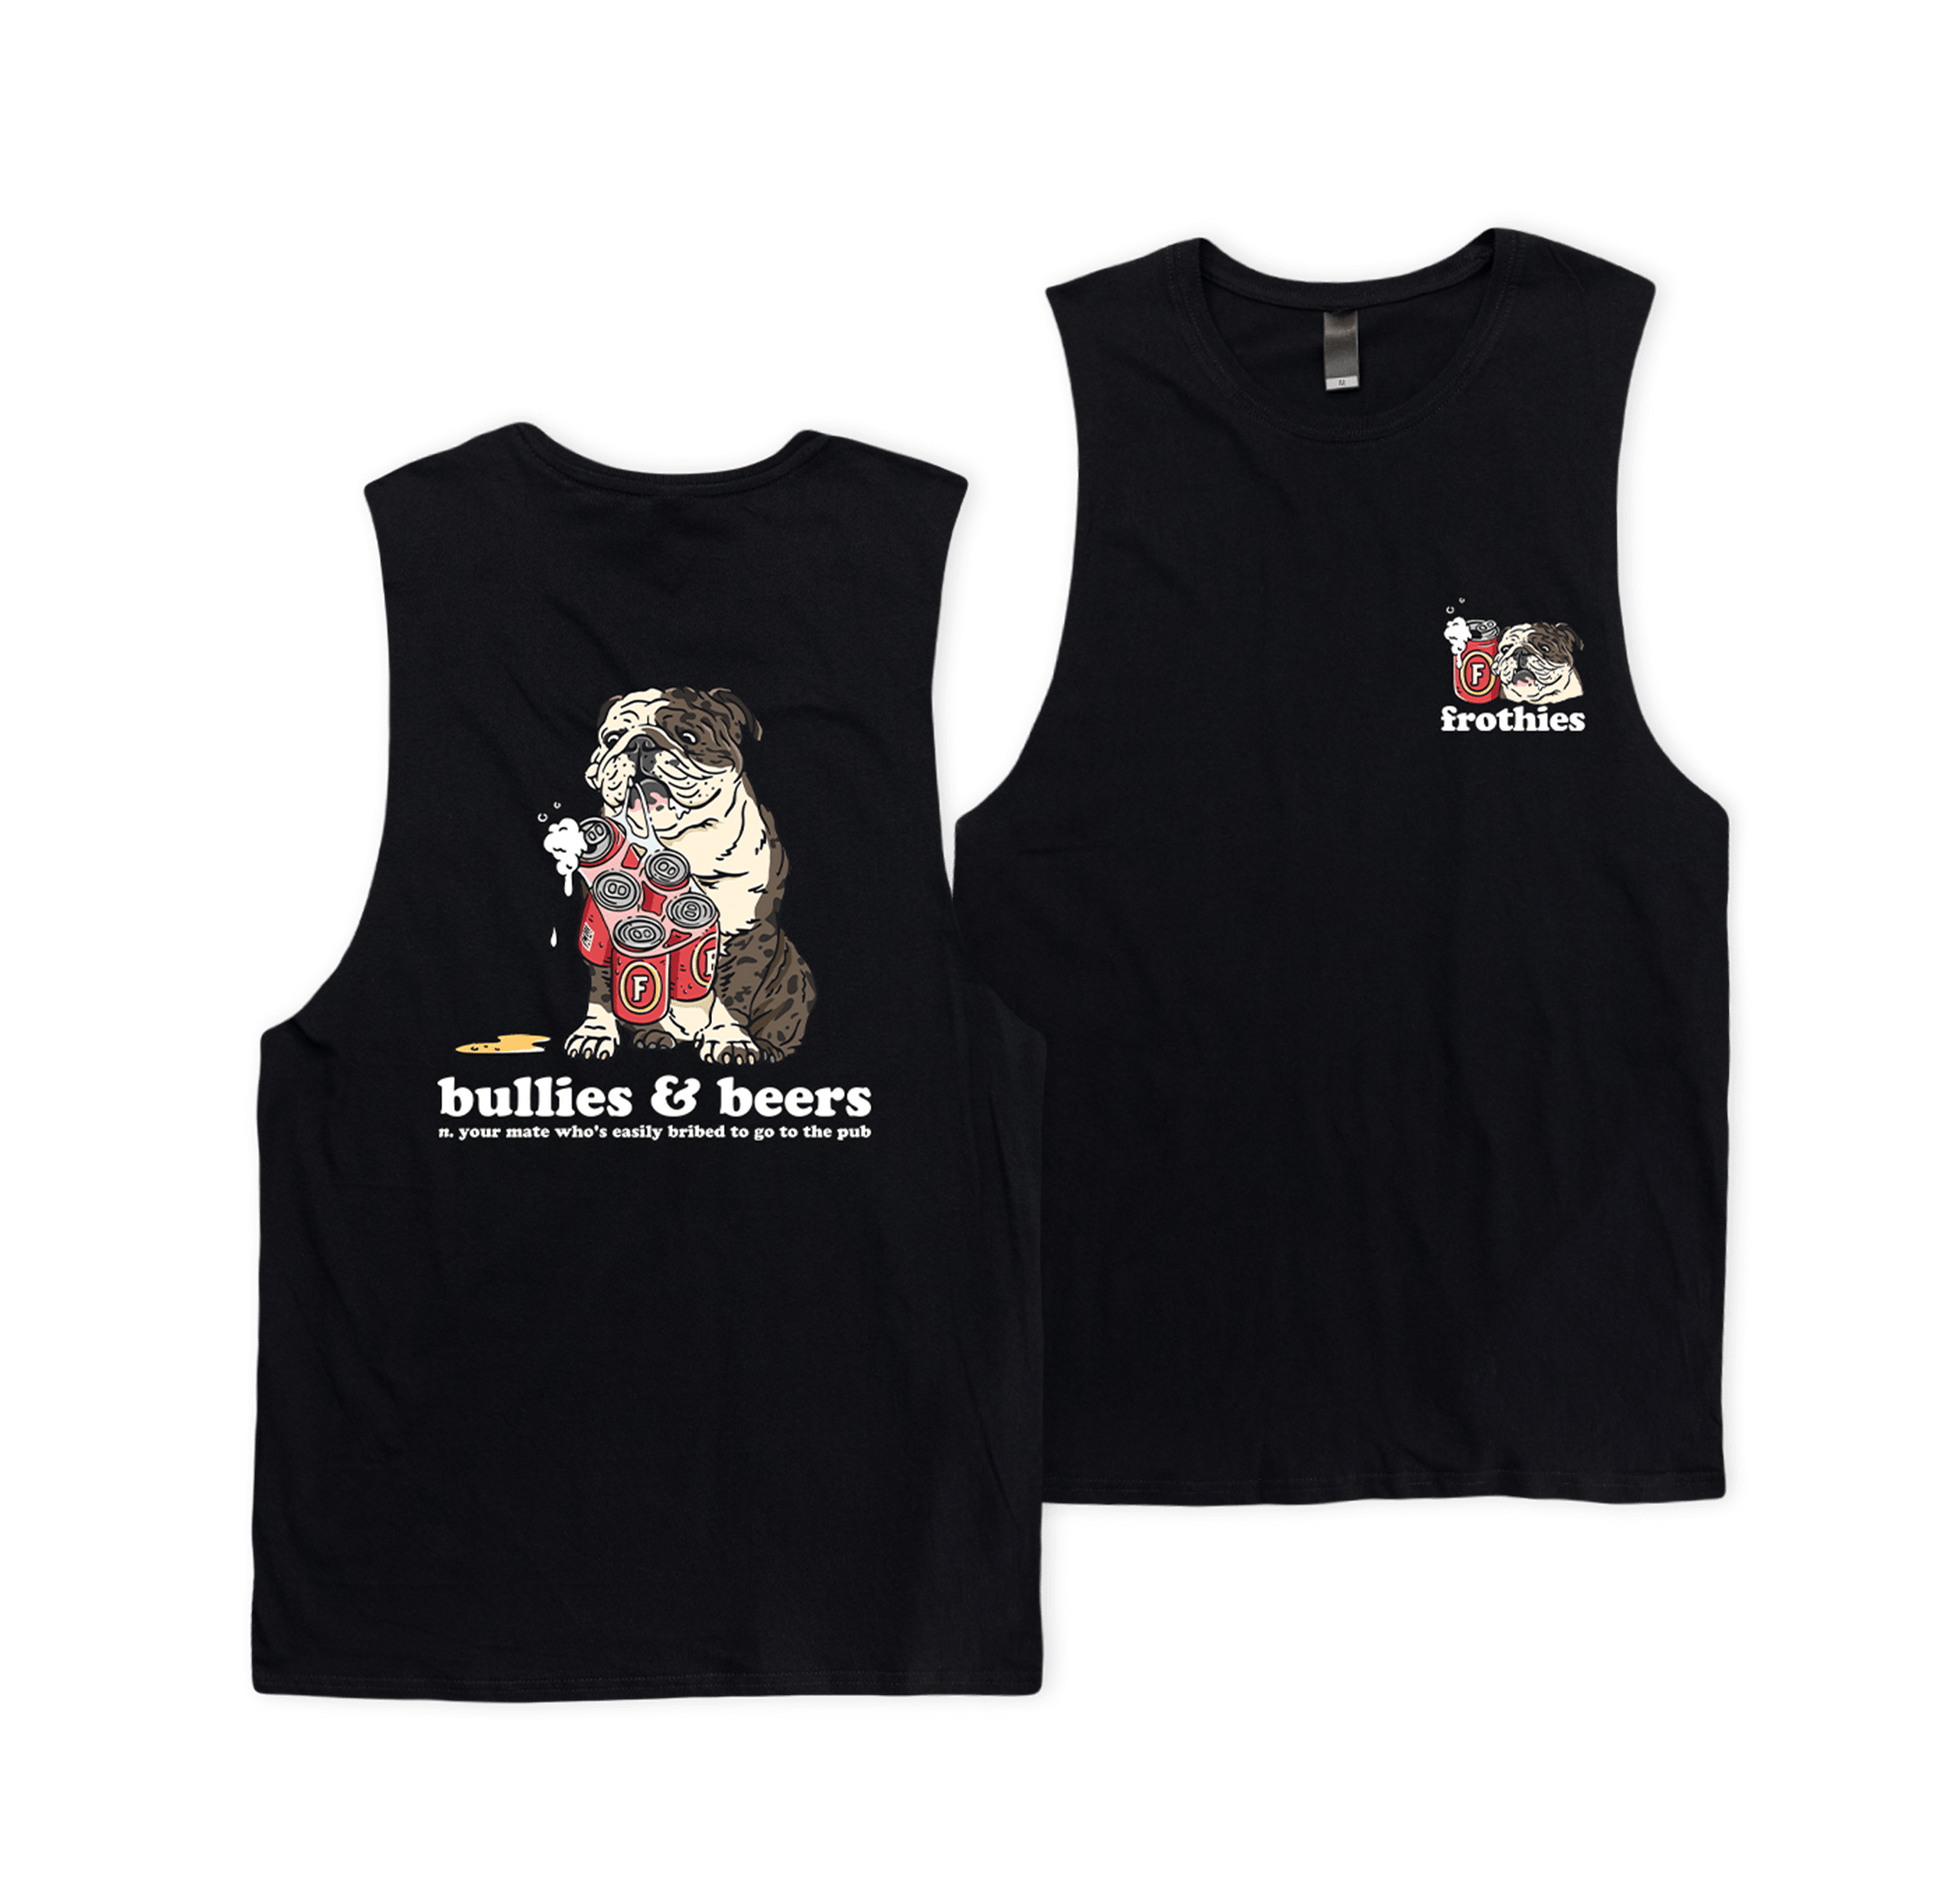 Bullies & Beers Muscle Tee T-Shirt Frothies